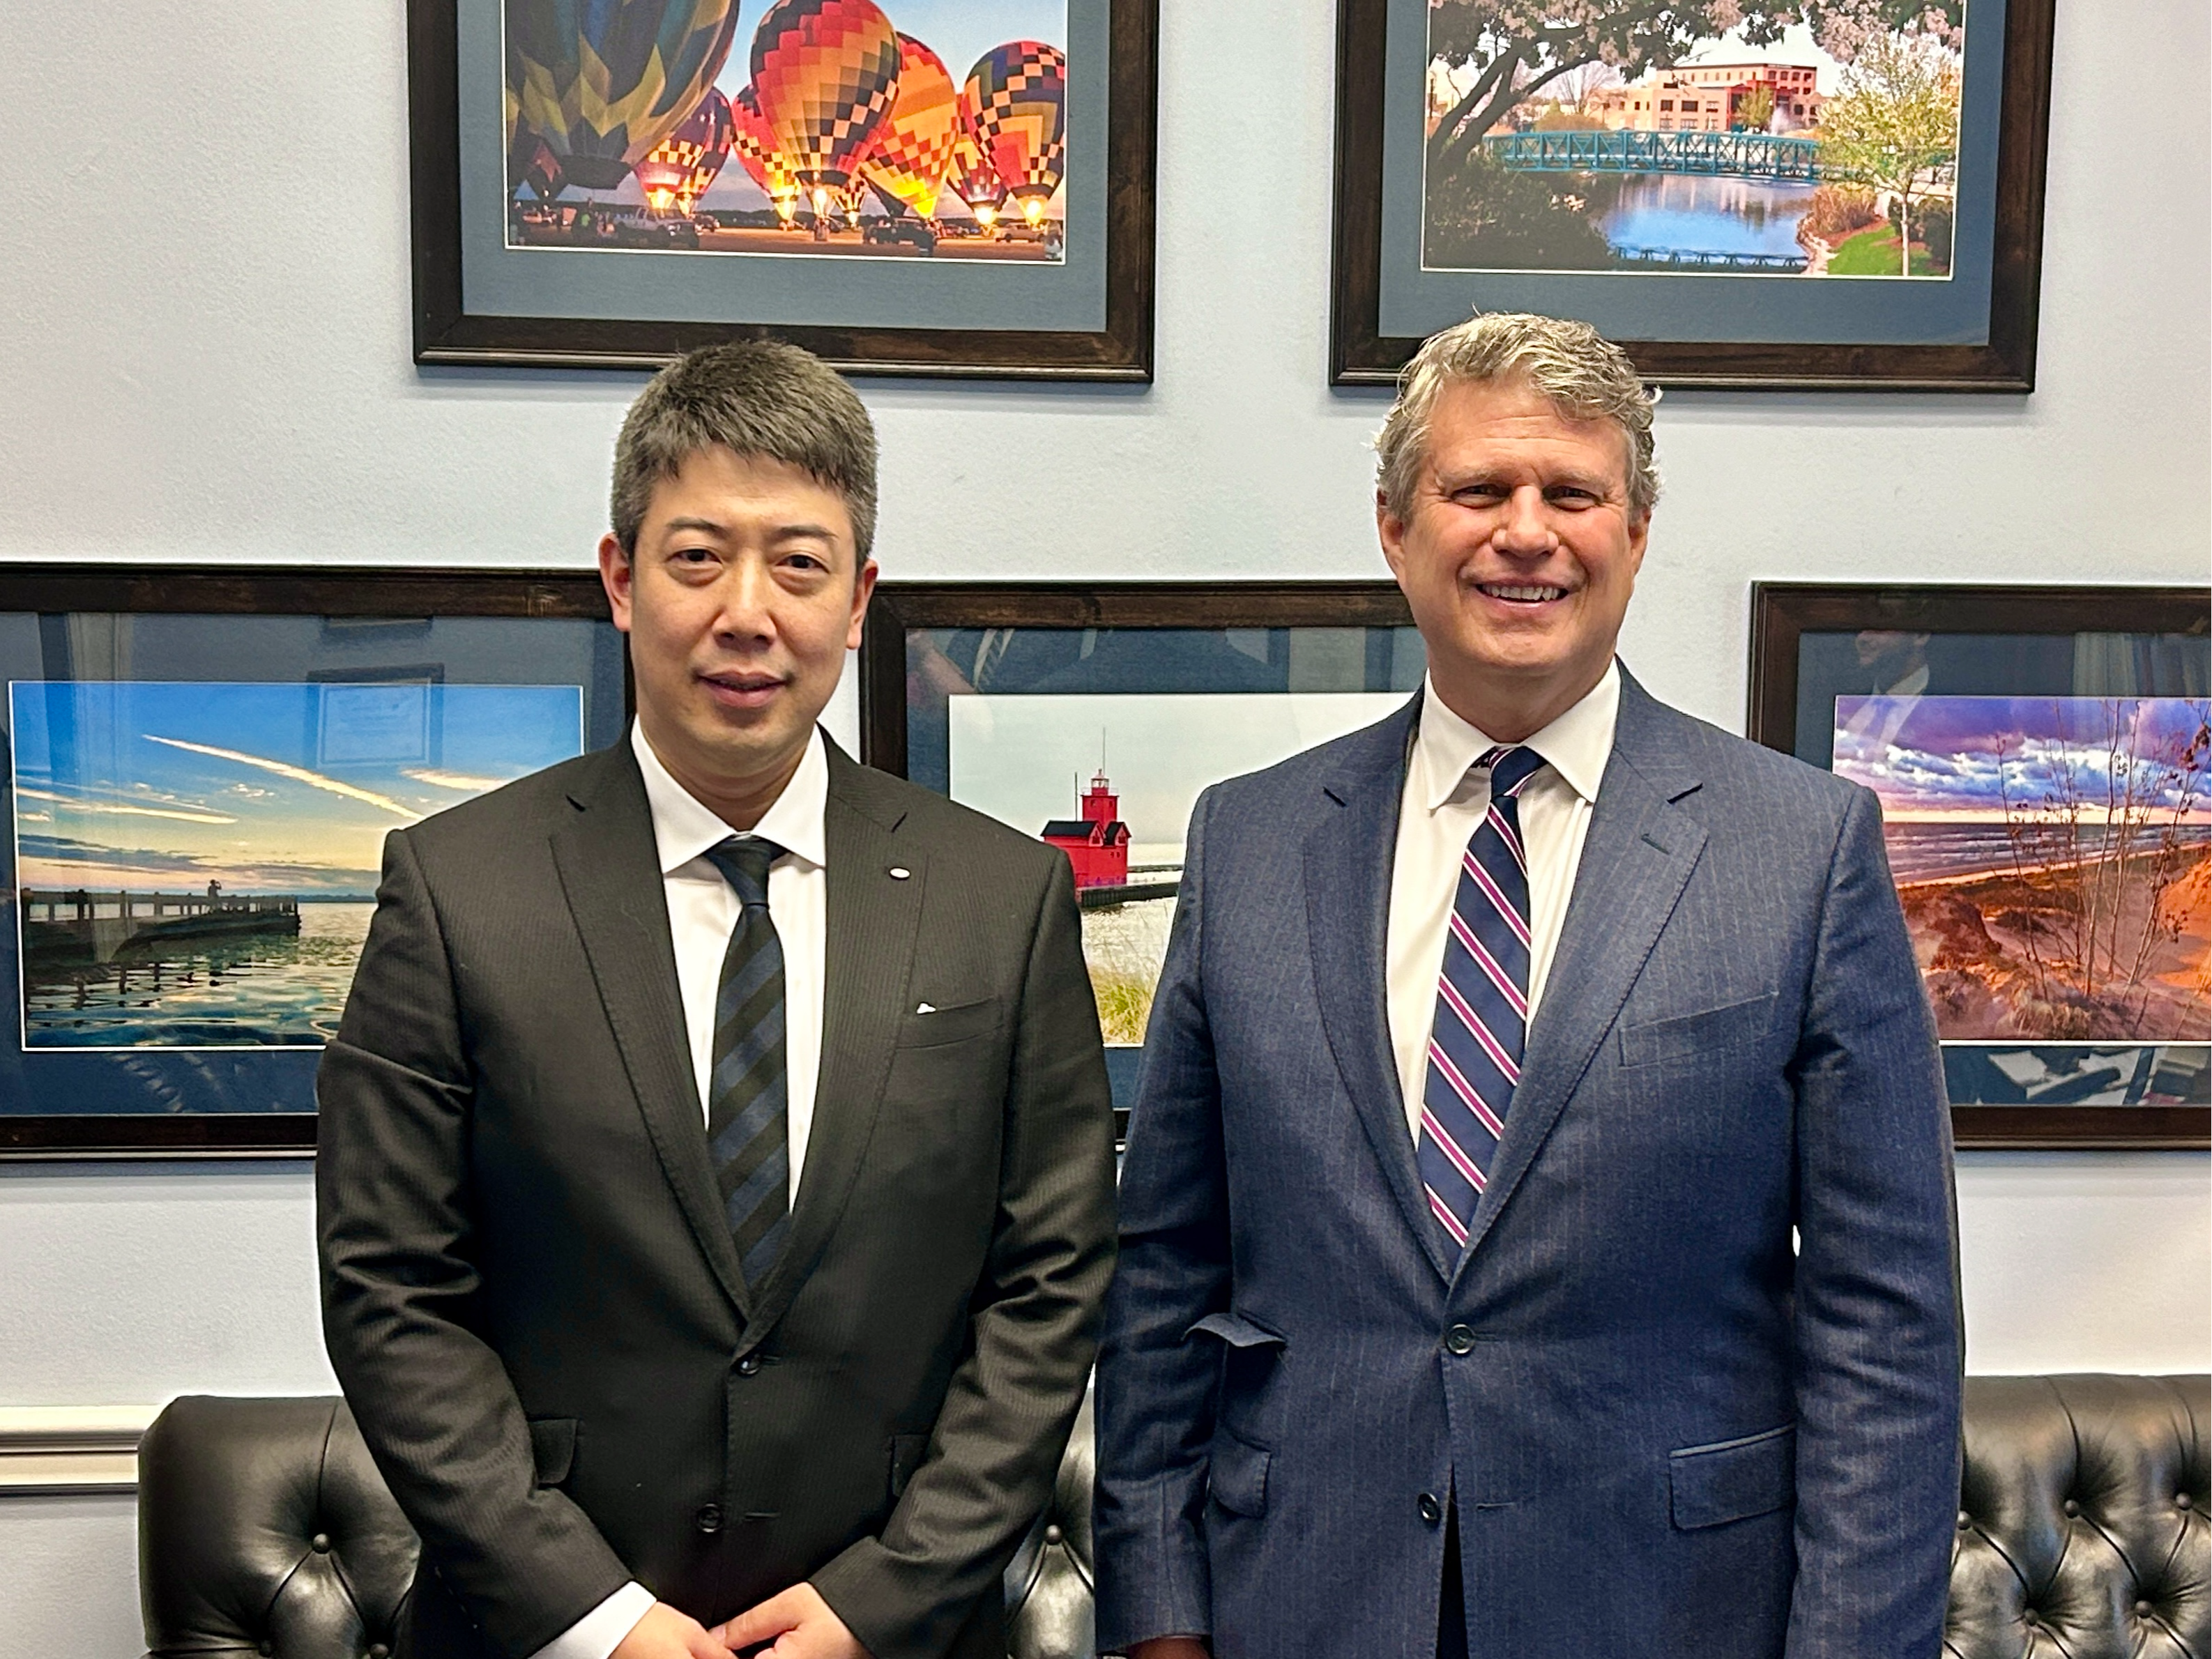 Huizenga with Shuichi Kamakura, President of DENSO Manufacturing in Battle Creek